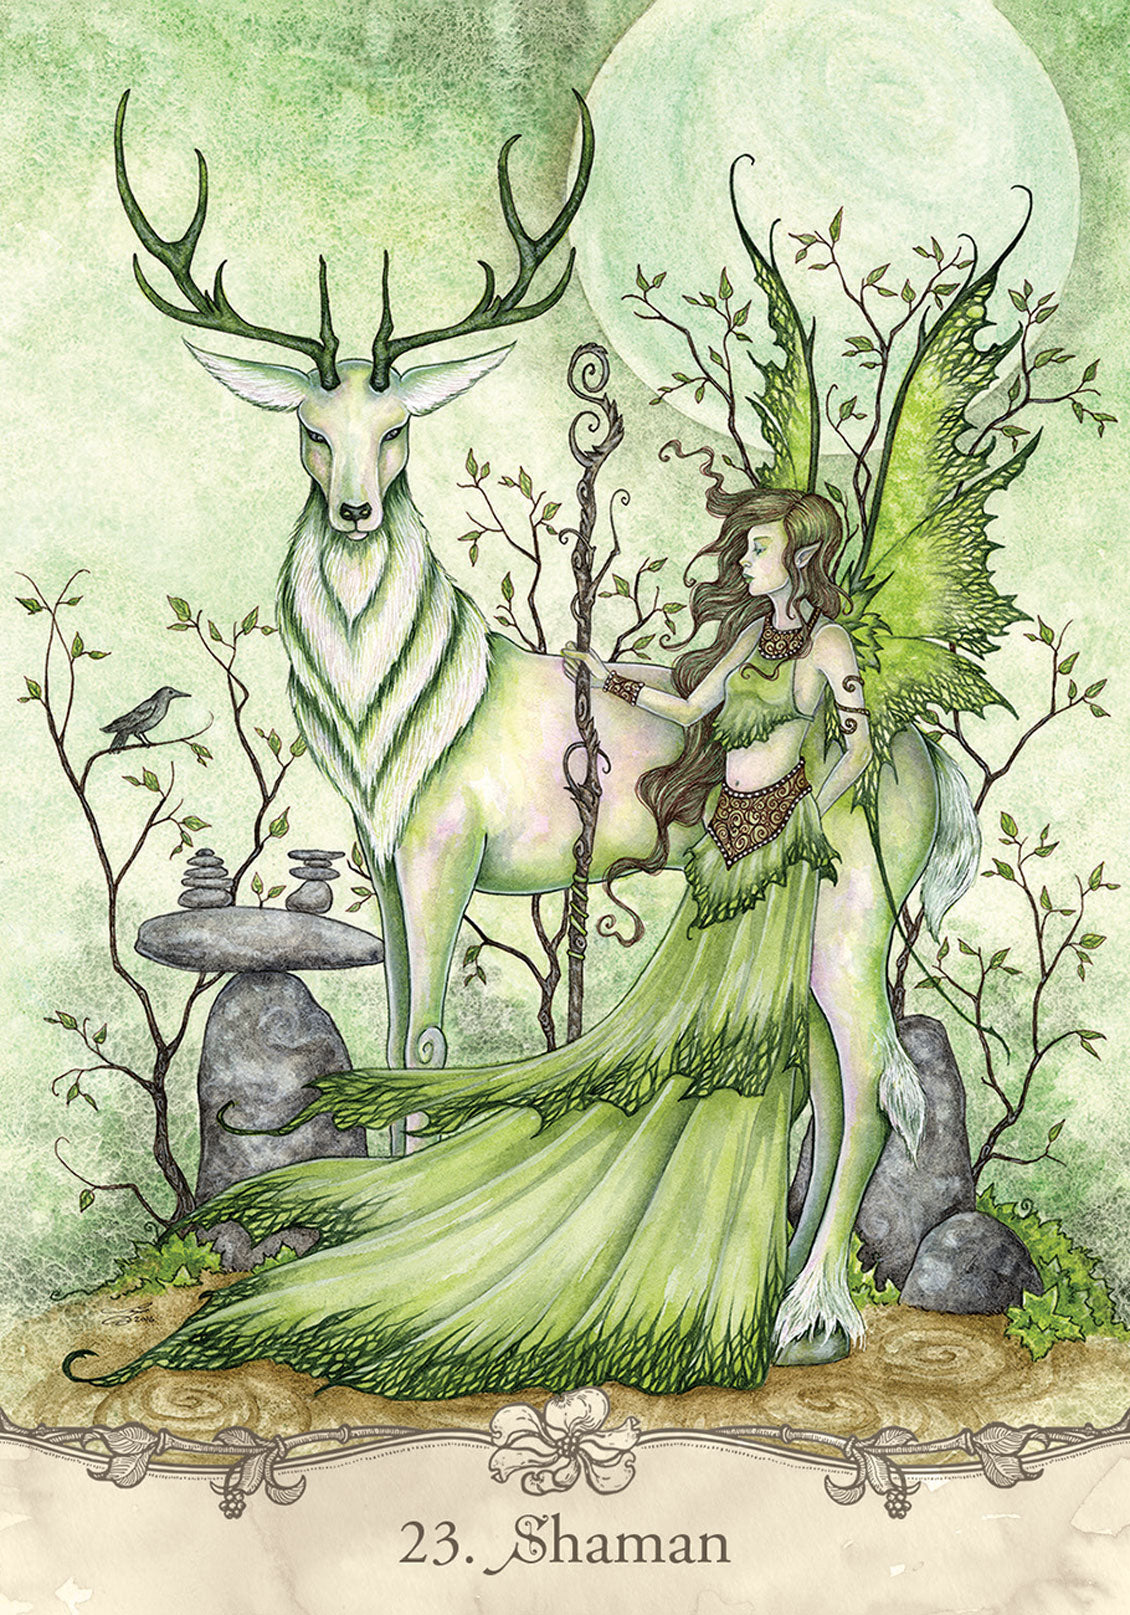 Fairy Wisdom Wisdom Oracle Cards & Book Set